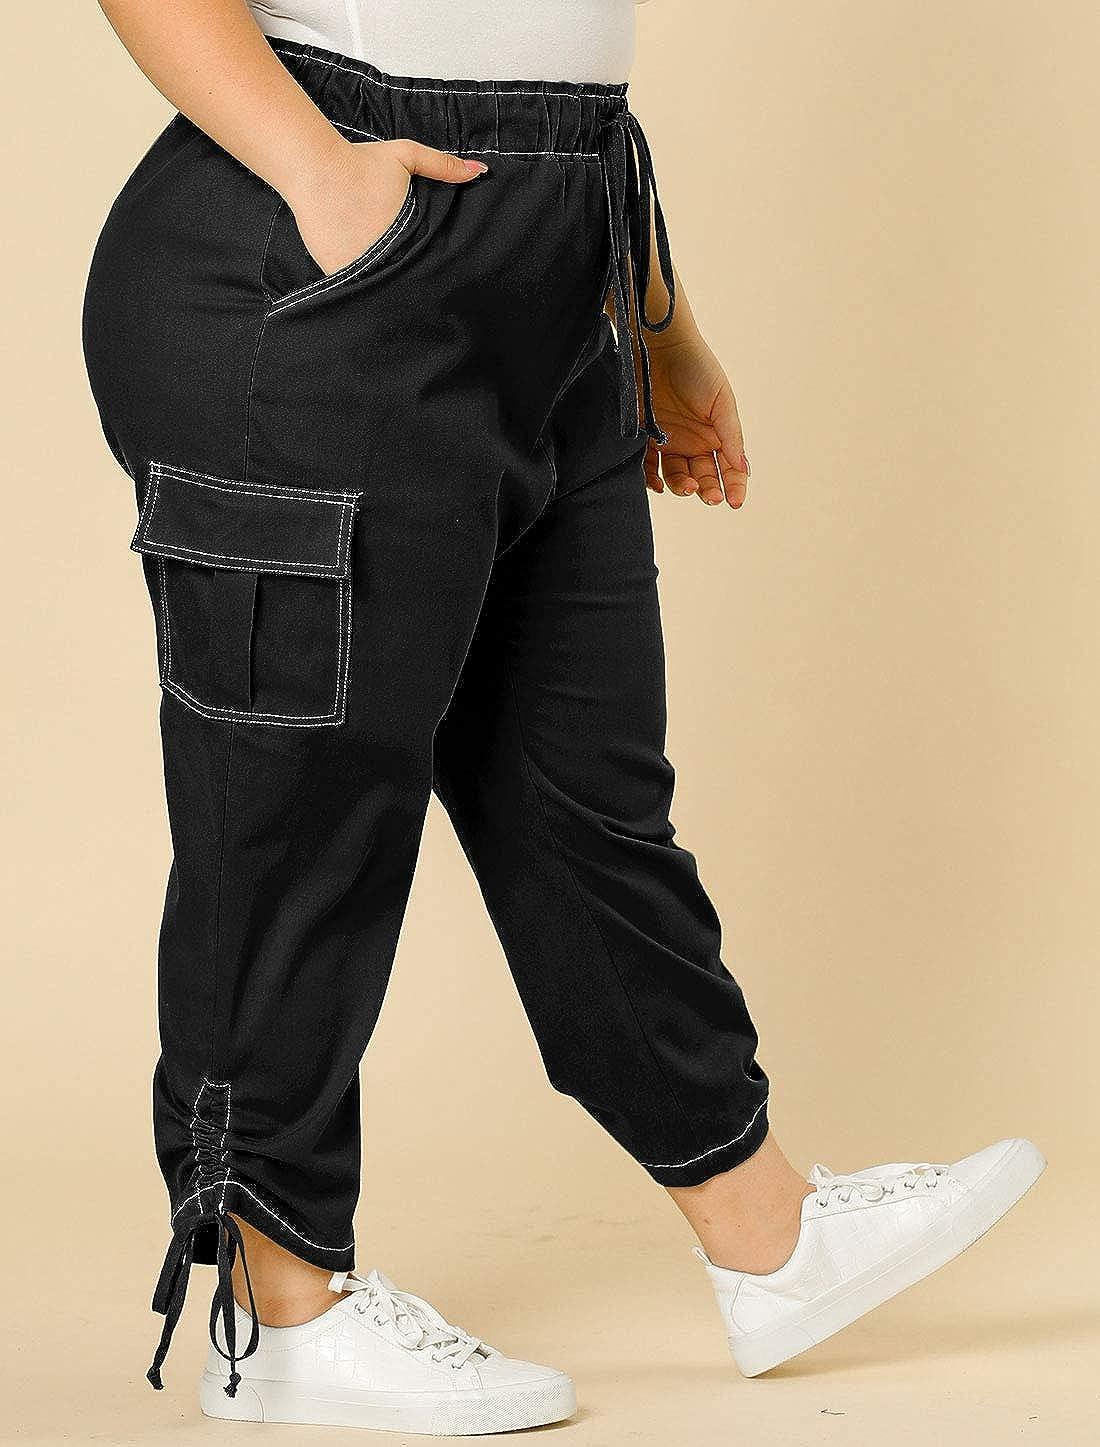 Unique Bargains Agnes Orinda Women's Plus Size Short Drawstring Elastic  Waist Pockets Cargo Shorts